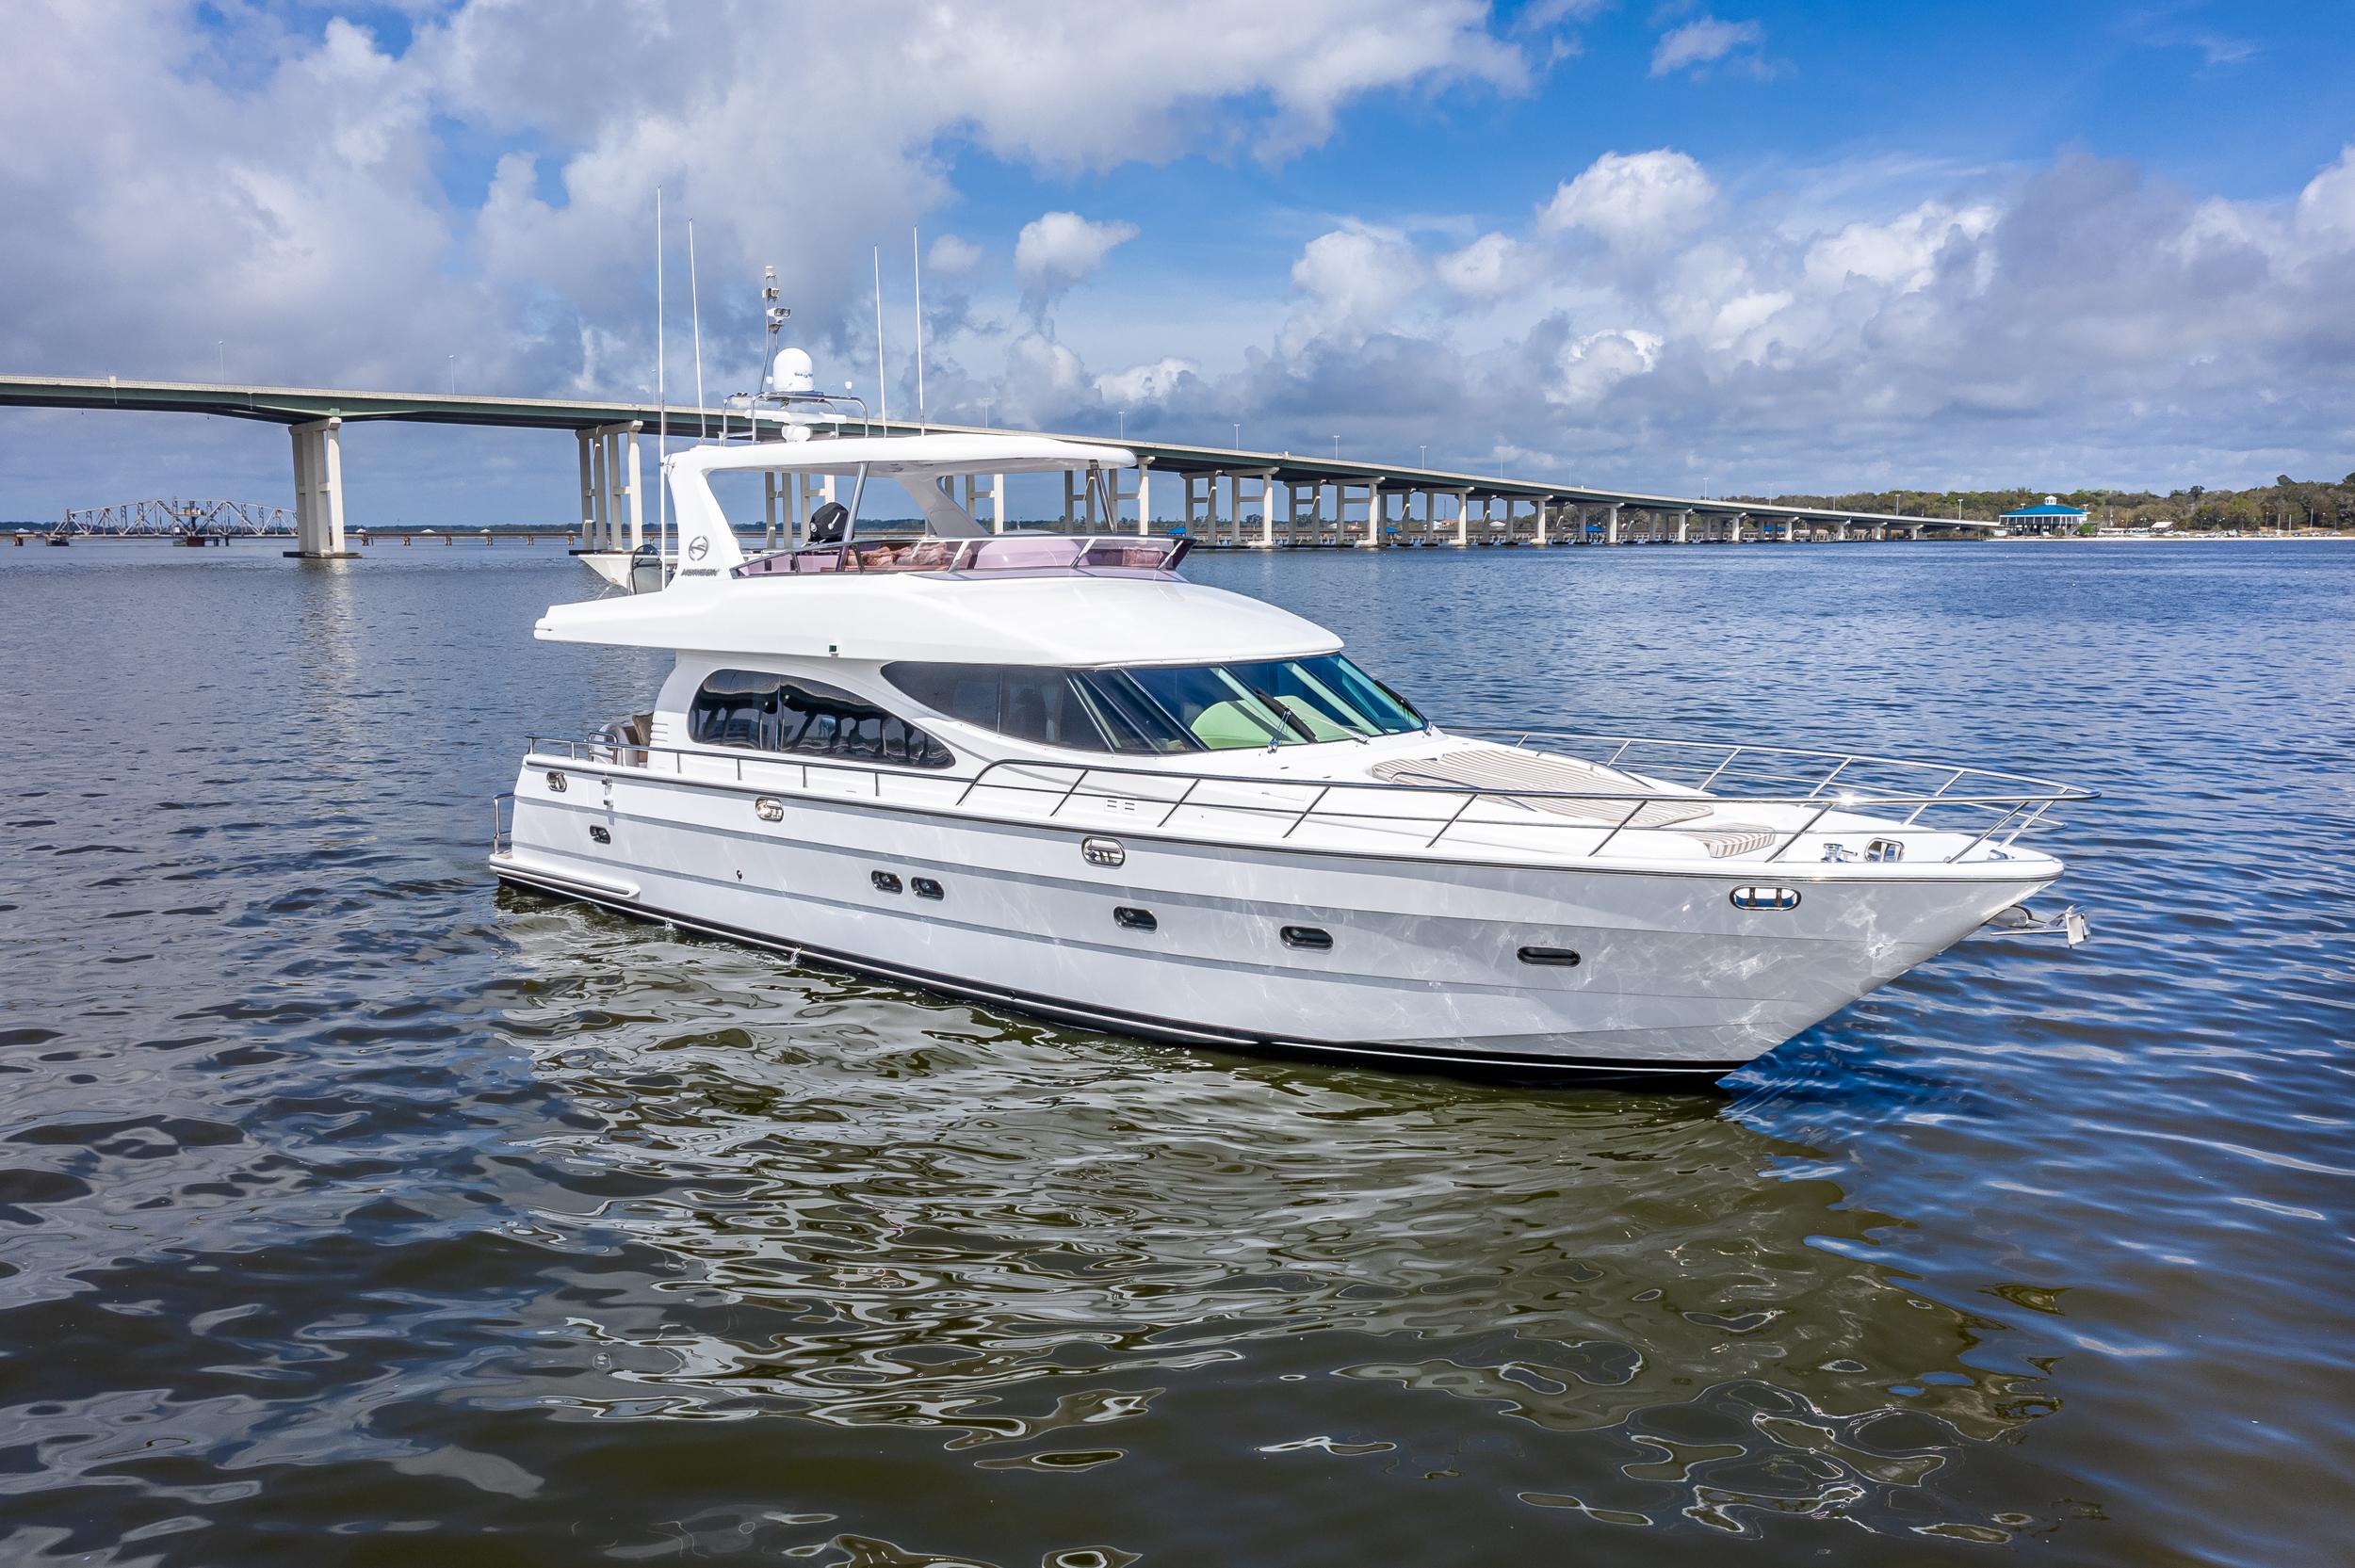 62 horizon yacht for sale